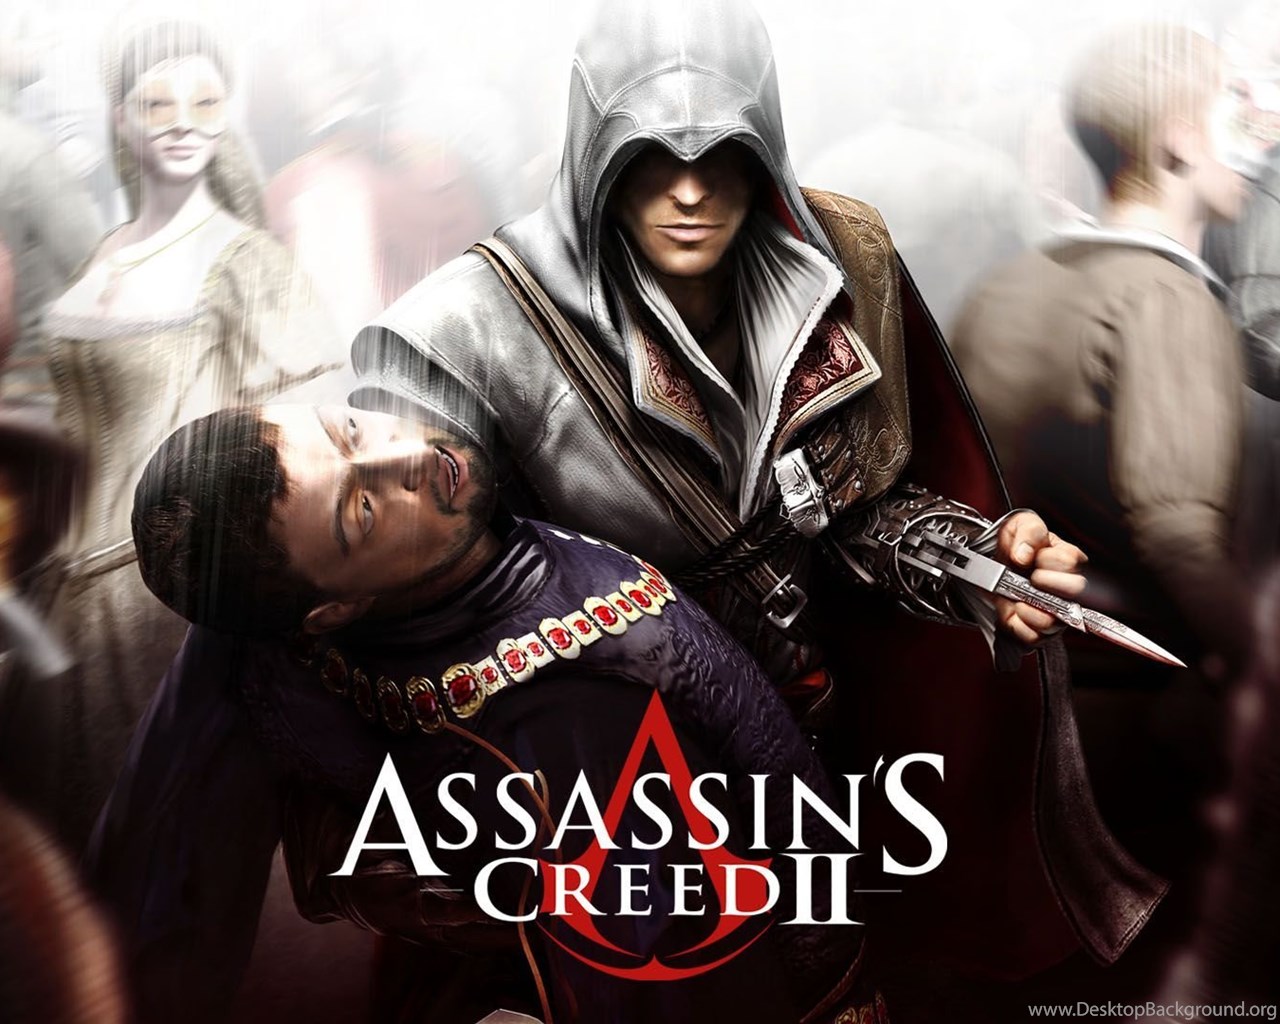 download assassin creed ii dmg free